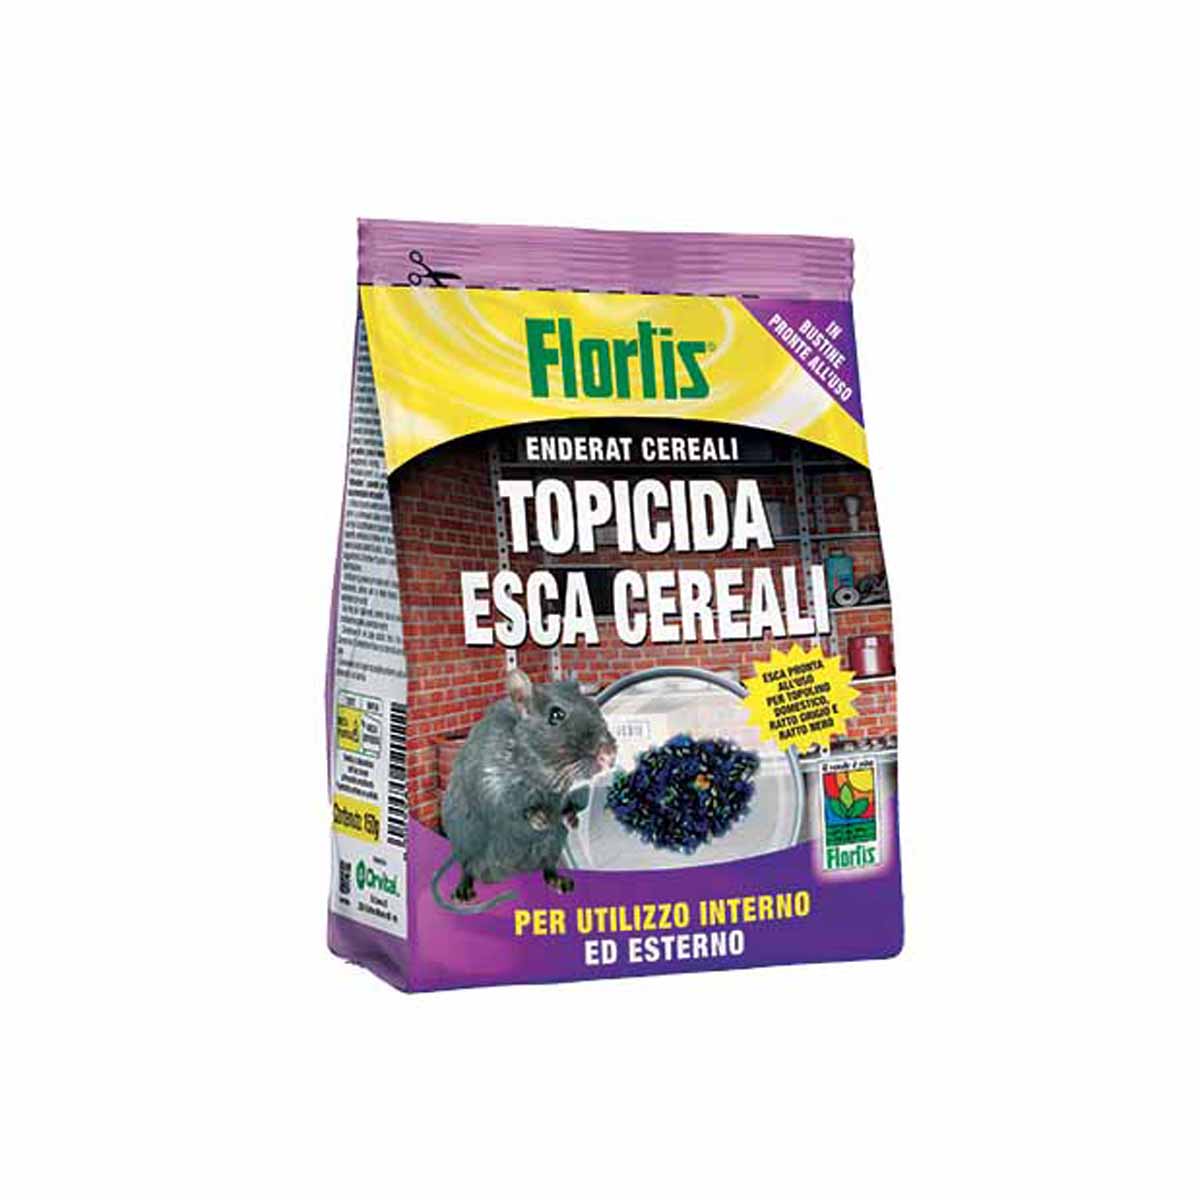 Flortis Topicida Esca Cereali 150g